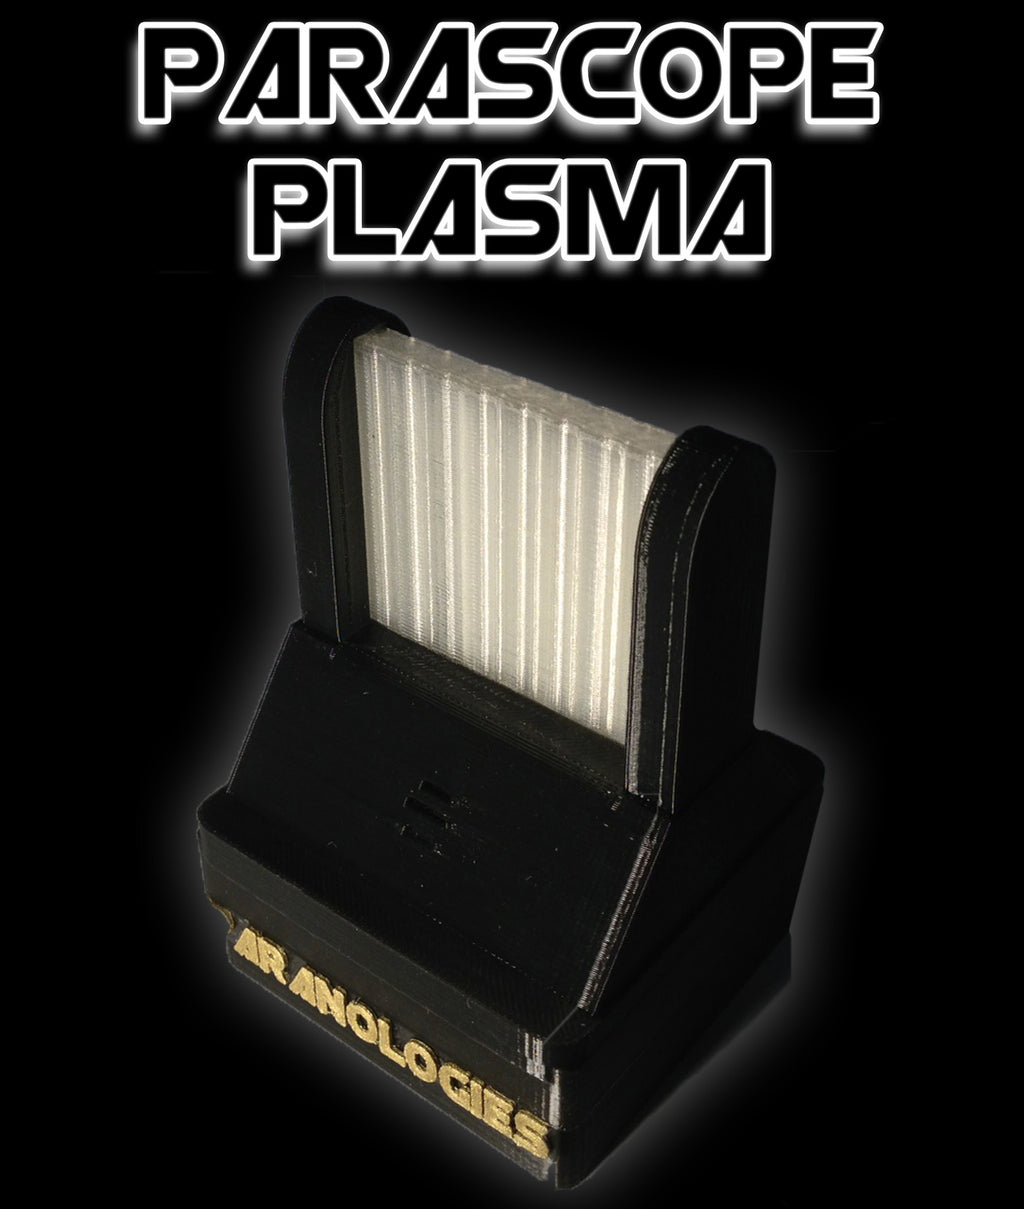 PARASCOPE PLASMA (Triboelectric Field Meter With Plasma Display)